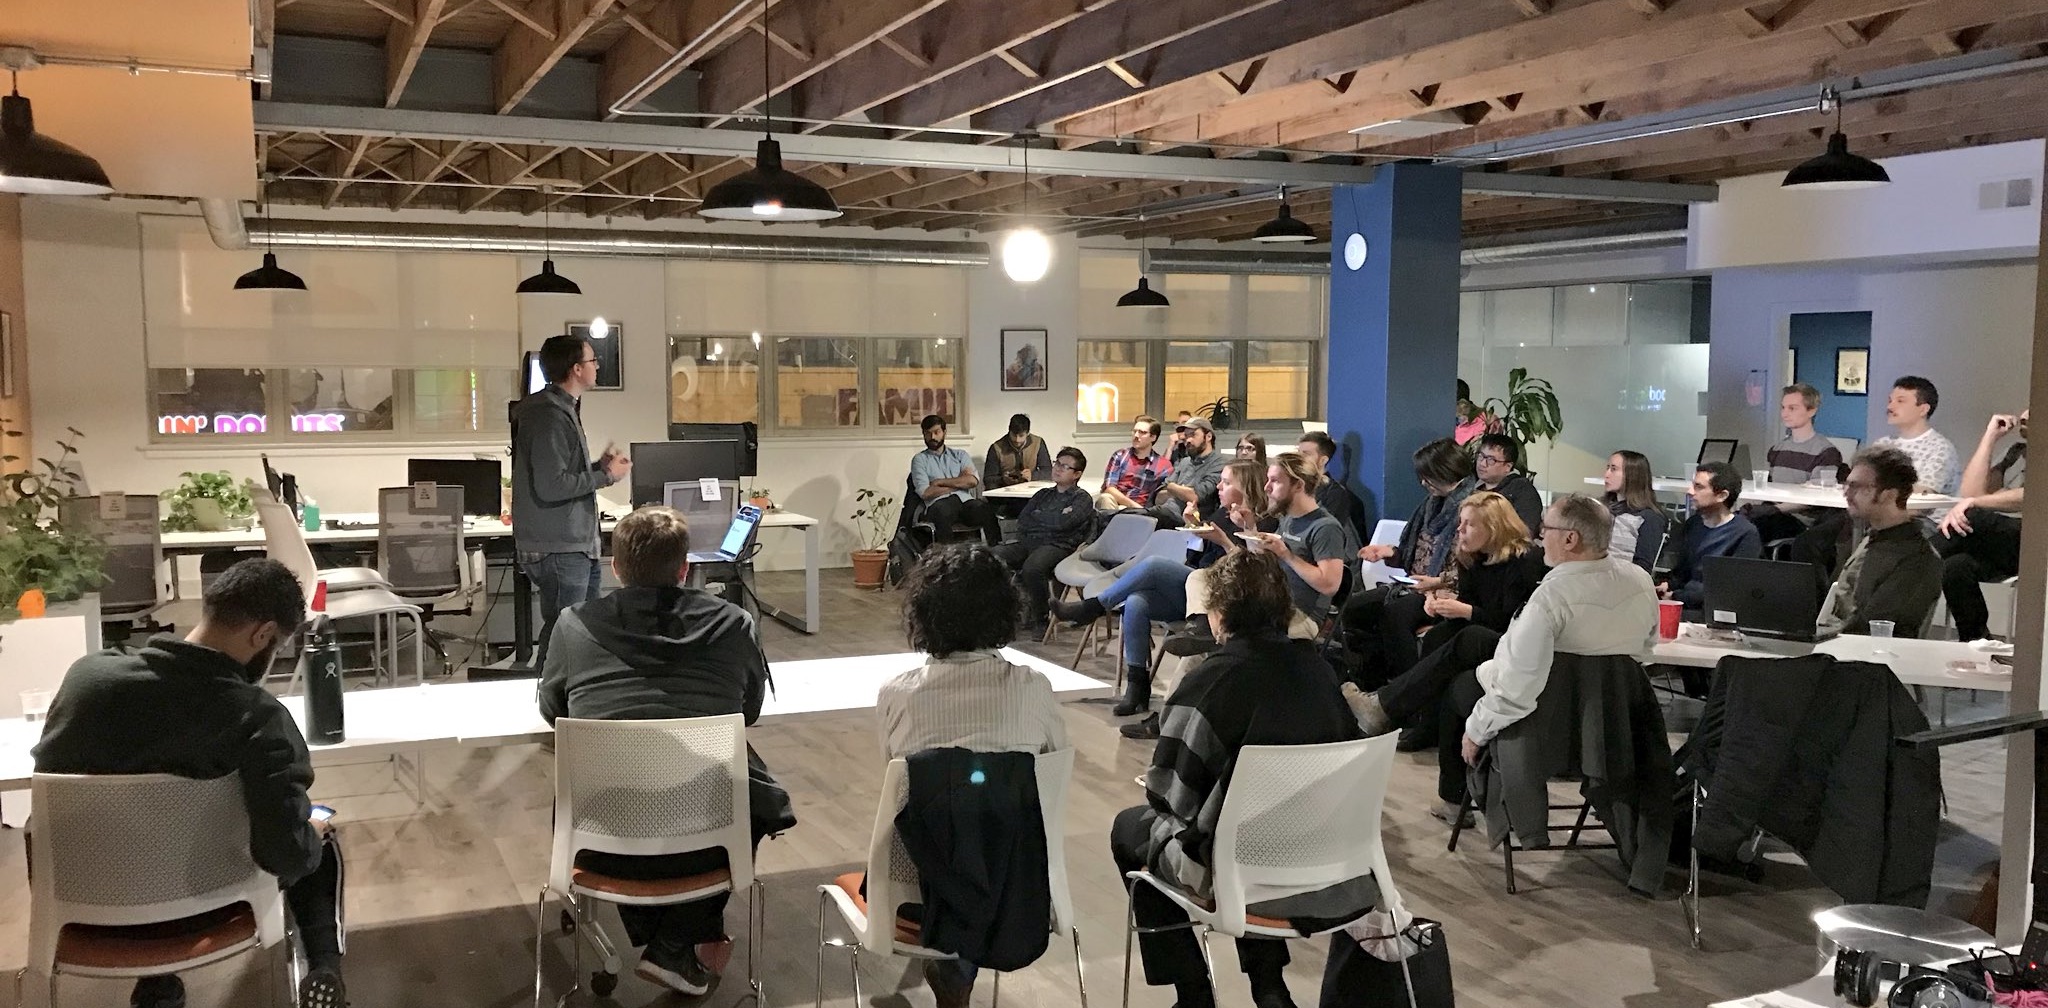 Derek Eder presenting a the first Logan Square Hack Night on November 8, 2017. Photo by Levi Baer